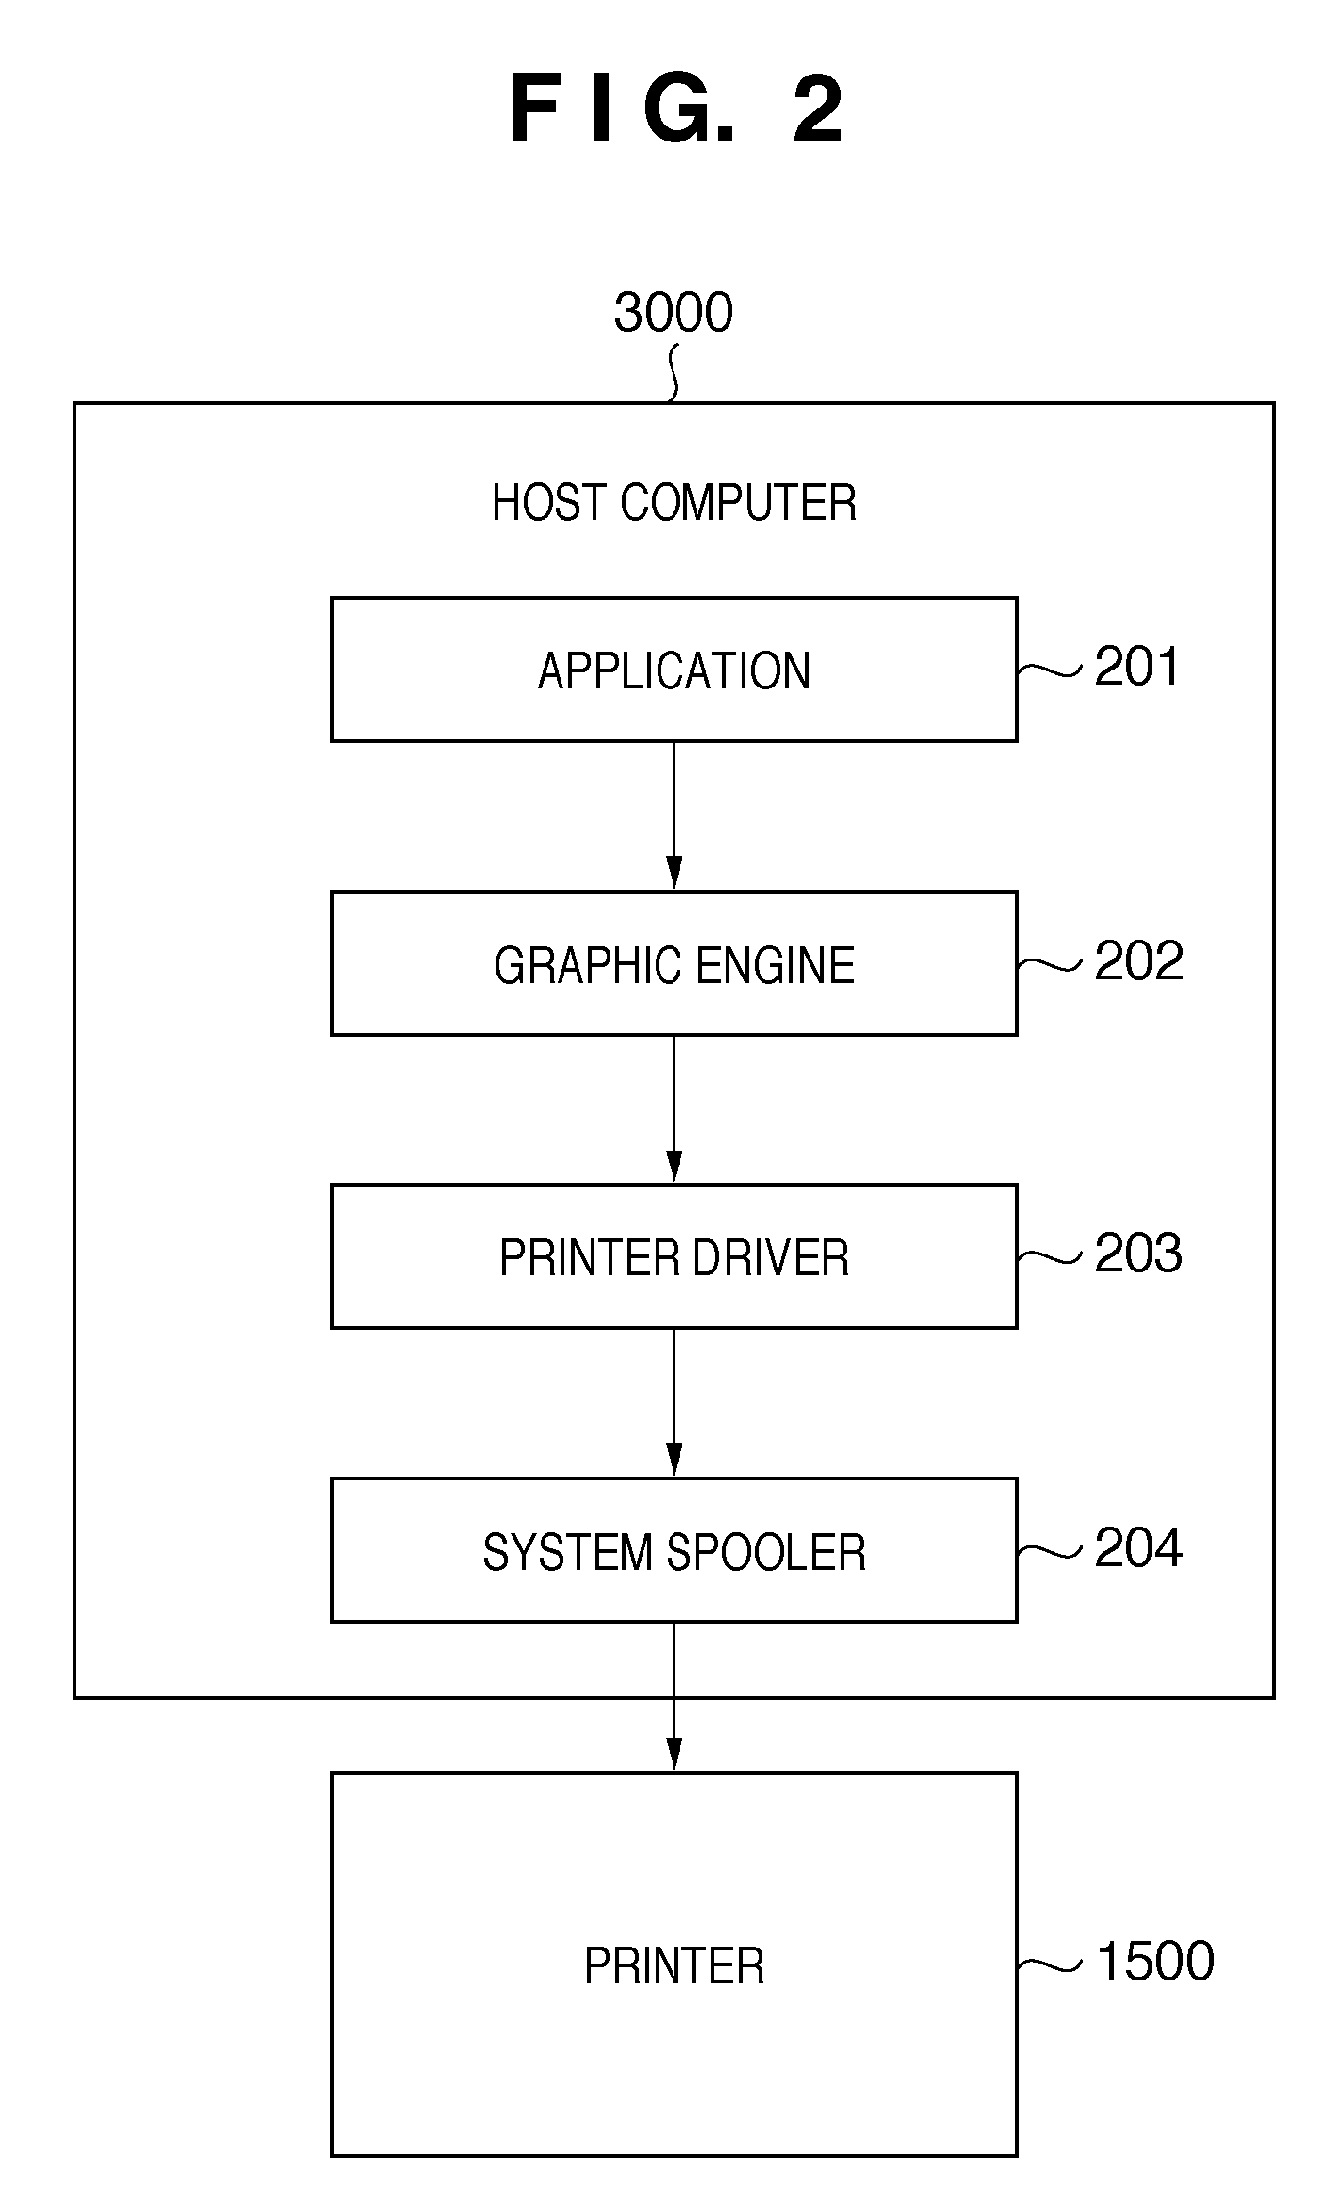 Print control apparatus, print control method, and computer-readable storage medium storing a print control program